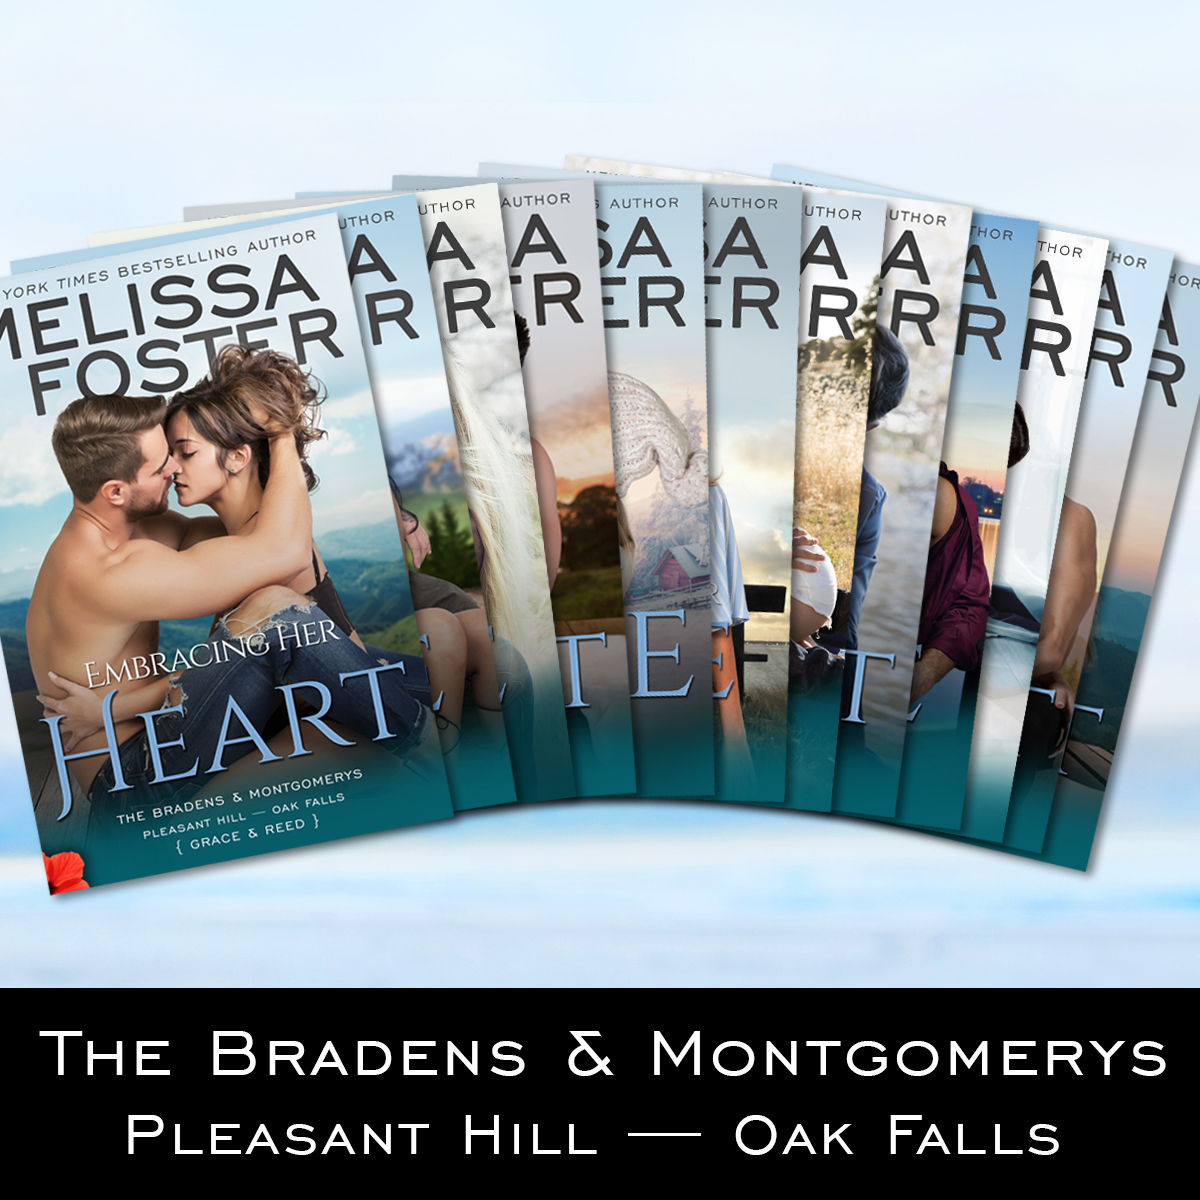 The Bradens & Montgomerys series by Melissa Foster